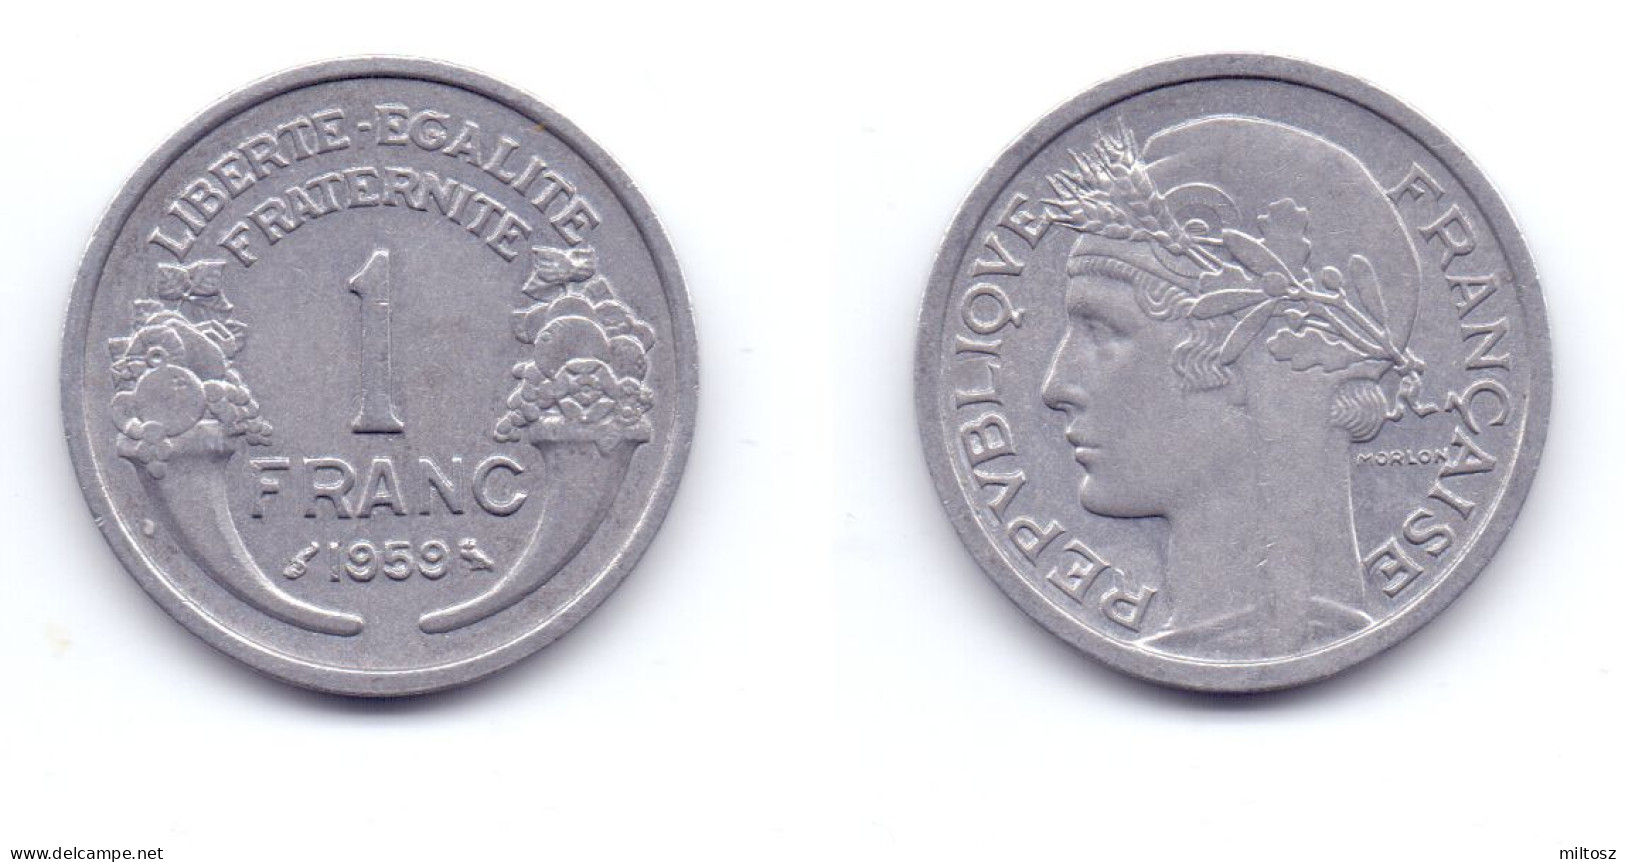 France 1 Franc 1959 - 2 Francs